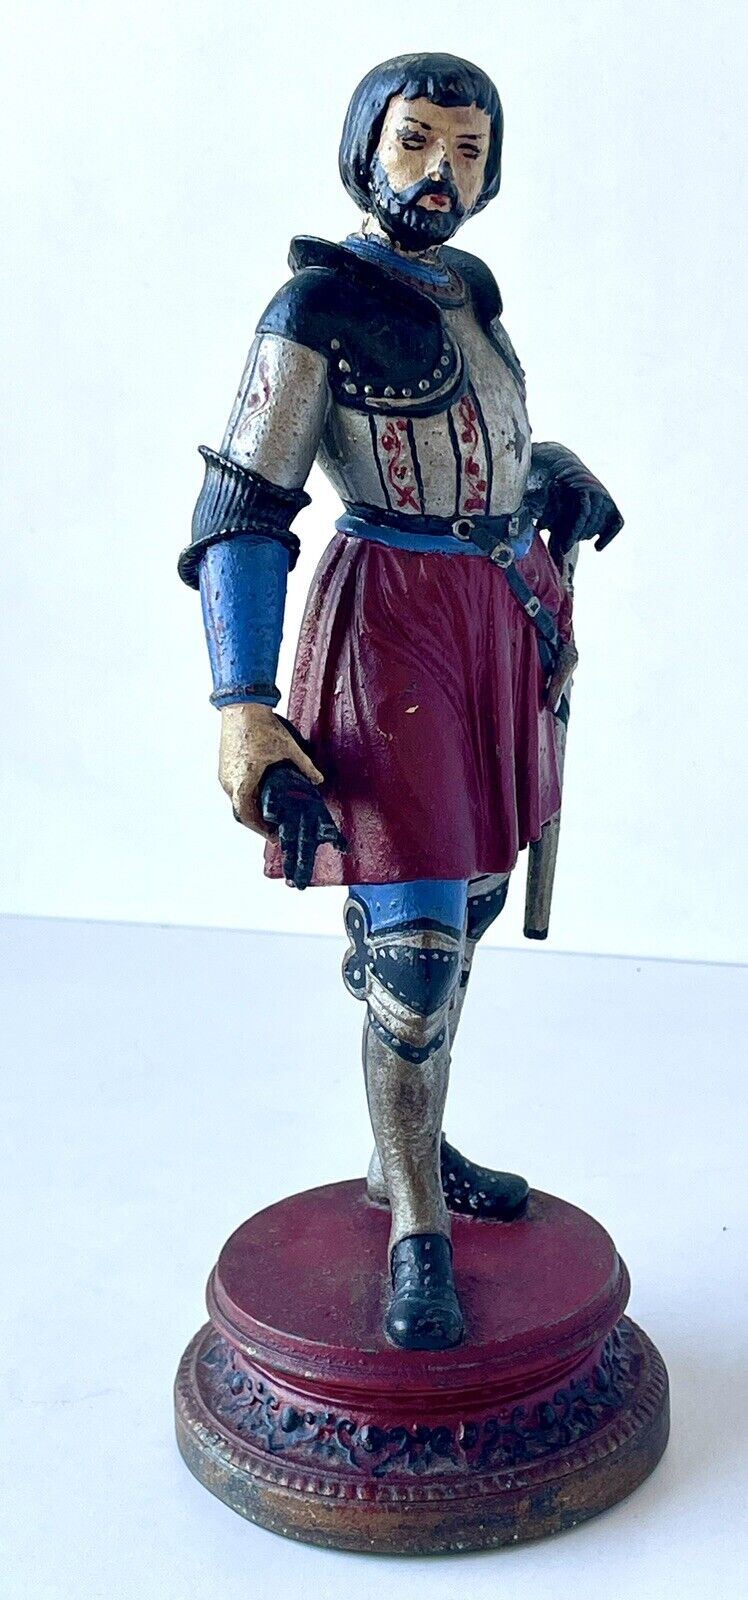 Antique Medieval Warrior Knight Soldier Metal Figurine Statue Hand Painted